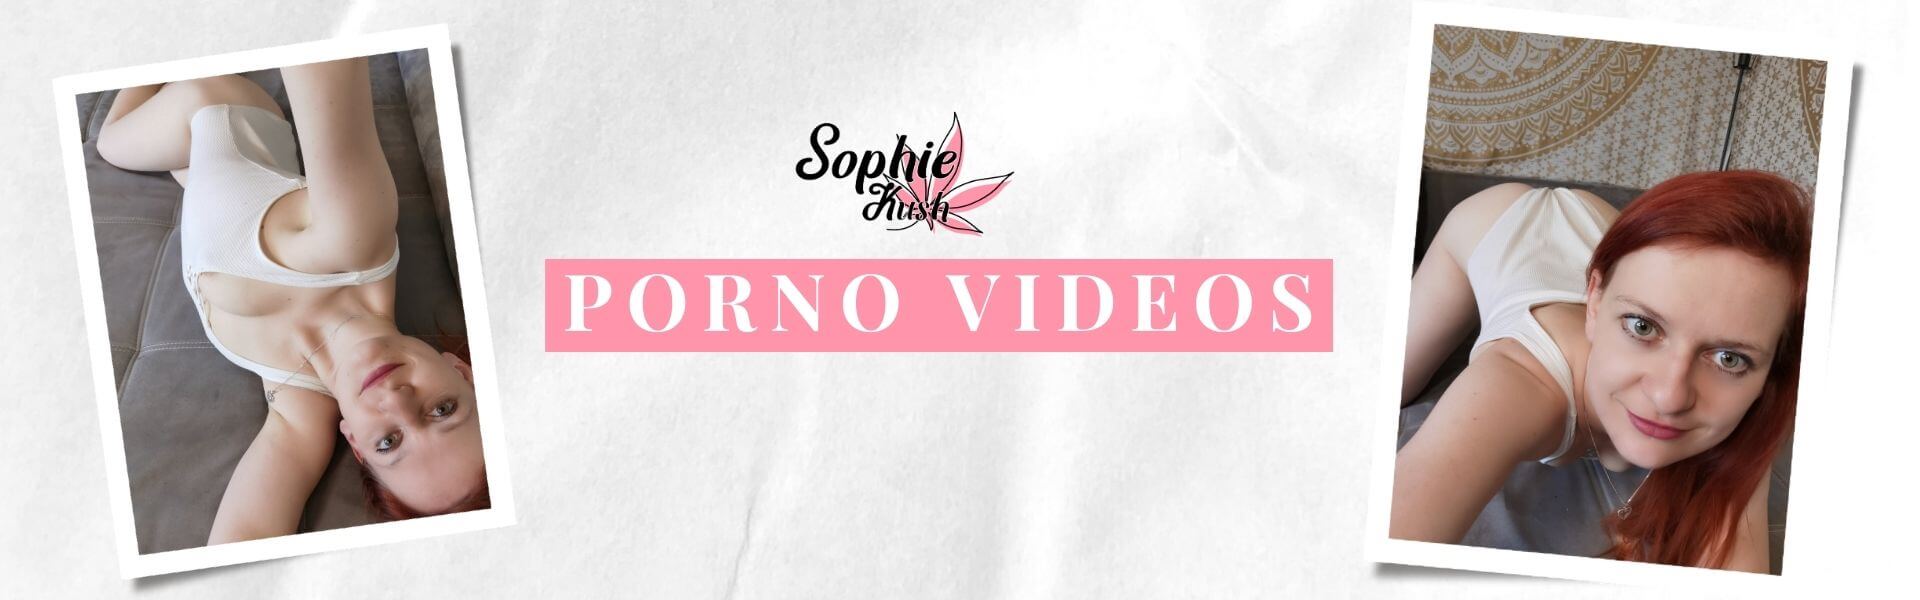 Sophie Kush Porno Videos